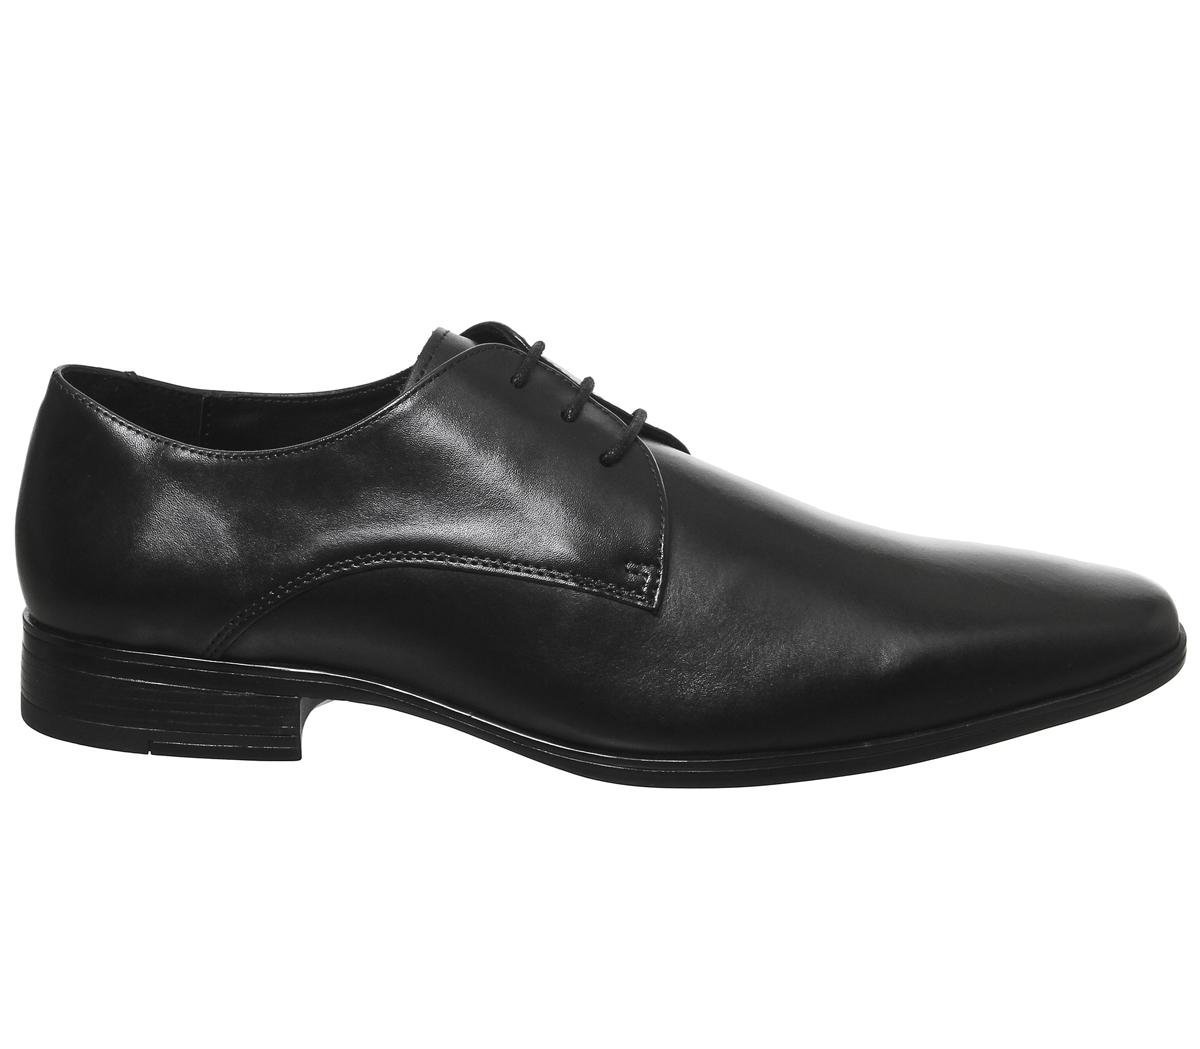 OFFICE Micro Derby Smart Shoes Black Leather - Men’s Smart Shoes